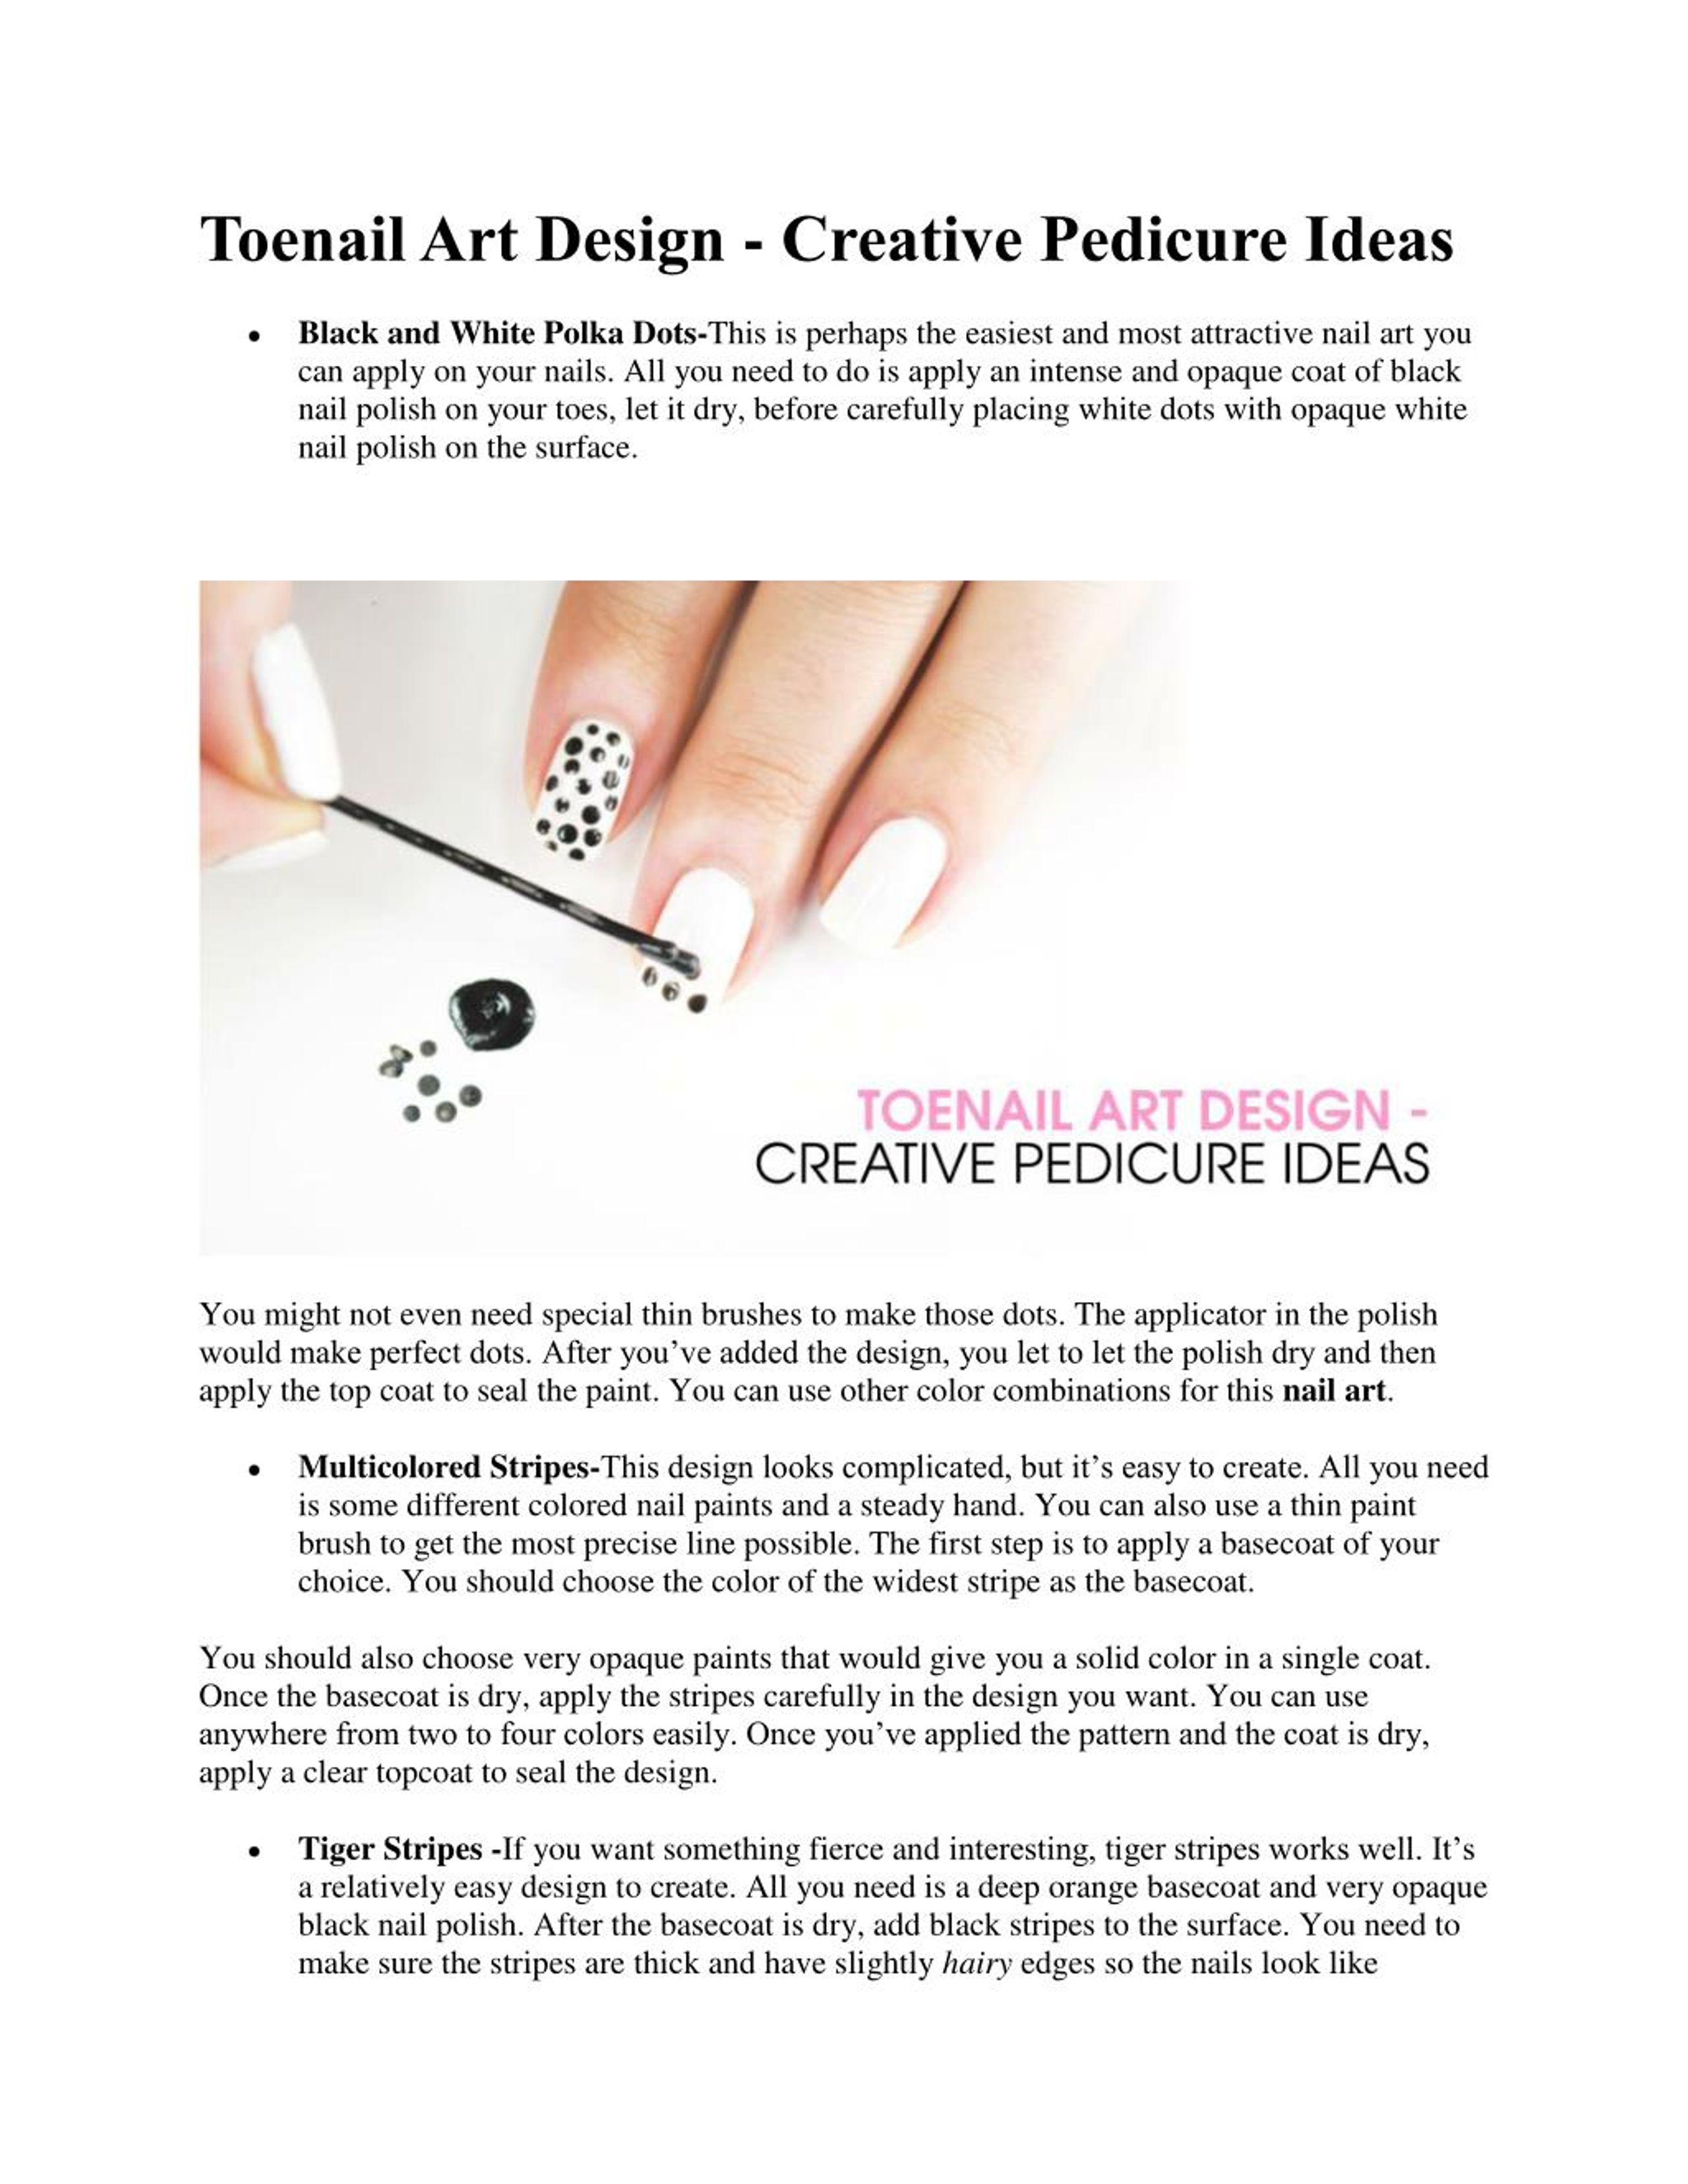 Eye Candy Nails & Training - Black polish with white polka dot nail art by  Elaine Moore on 25 January 2013 at 11:05